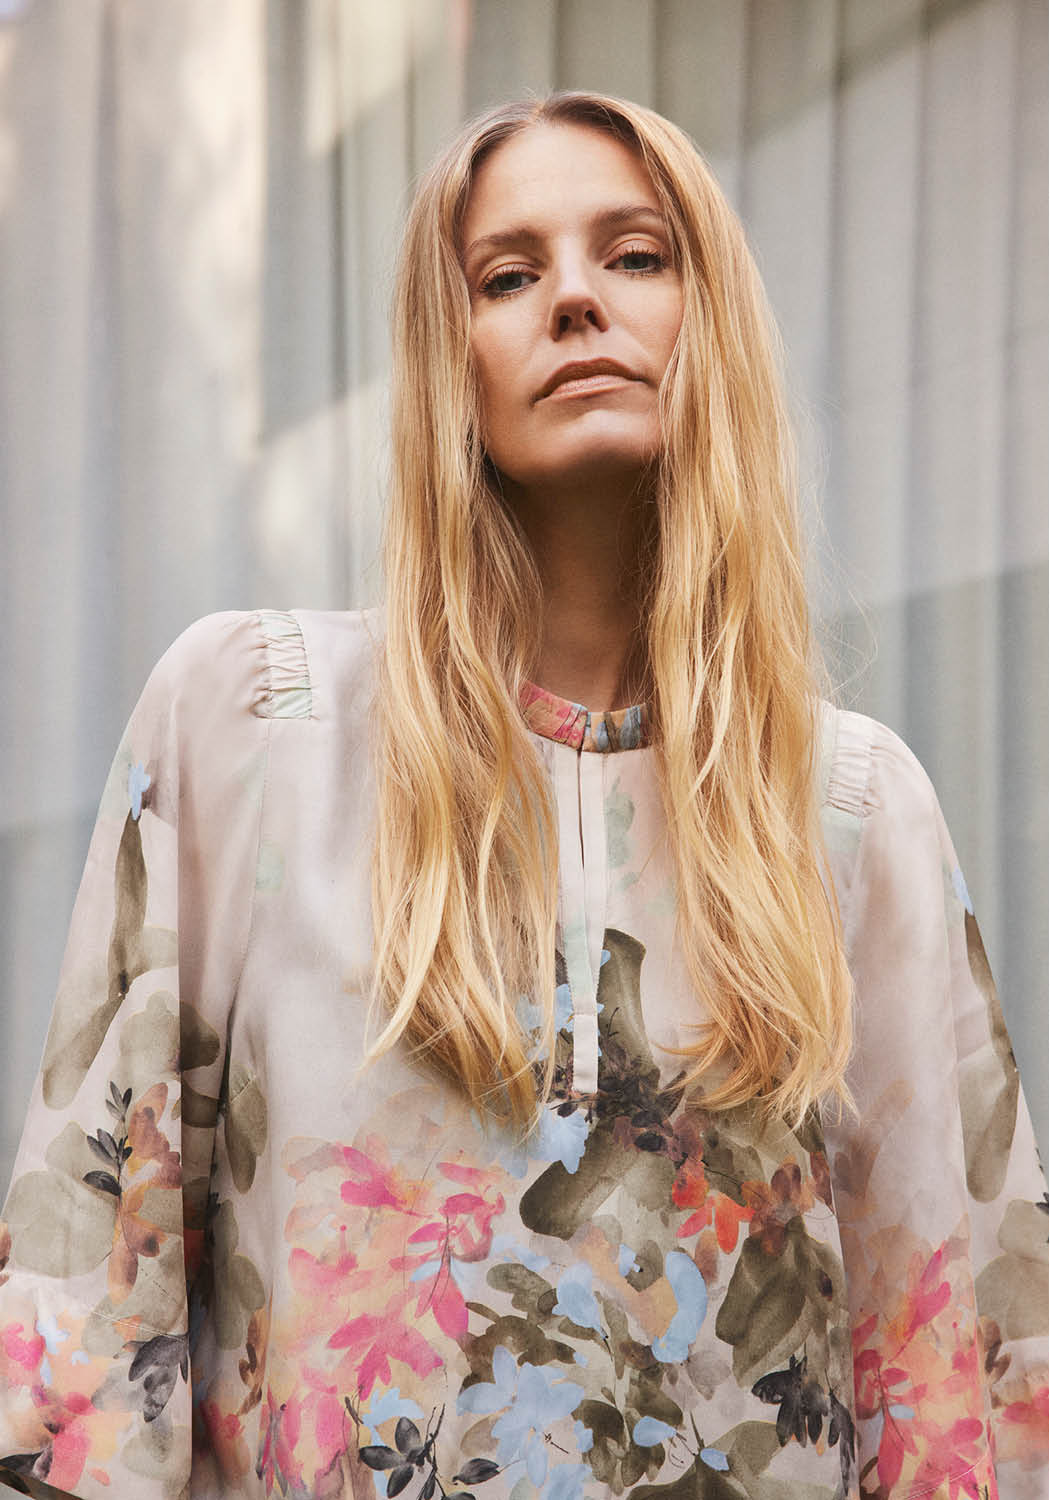 Effortless womenswear with a typical Scandinavian style aesthetic